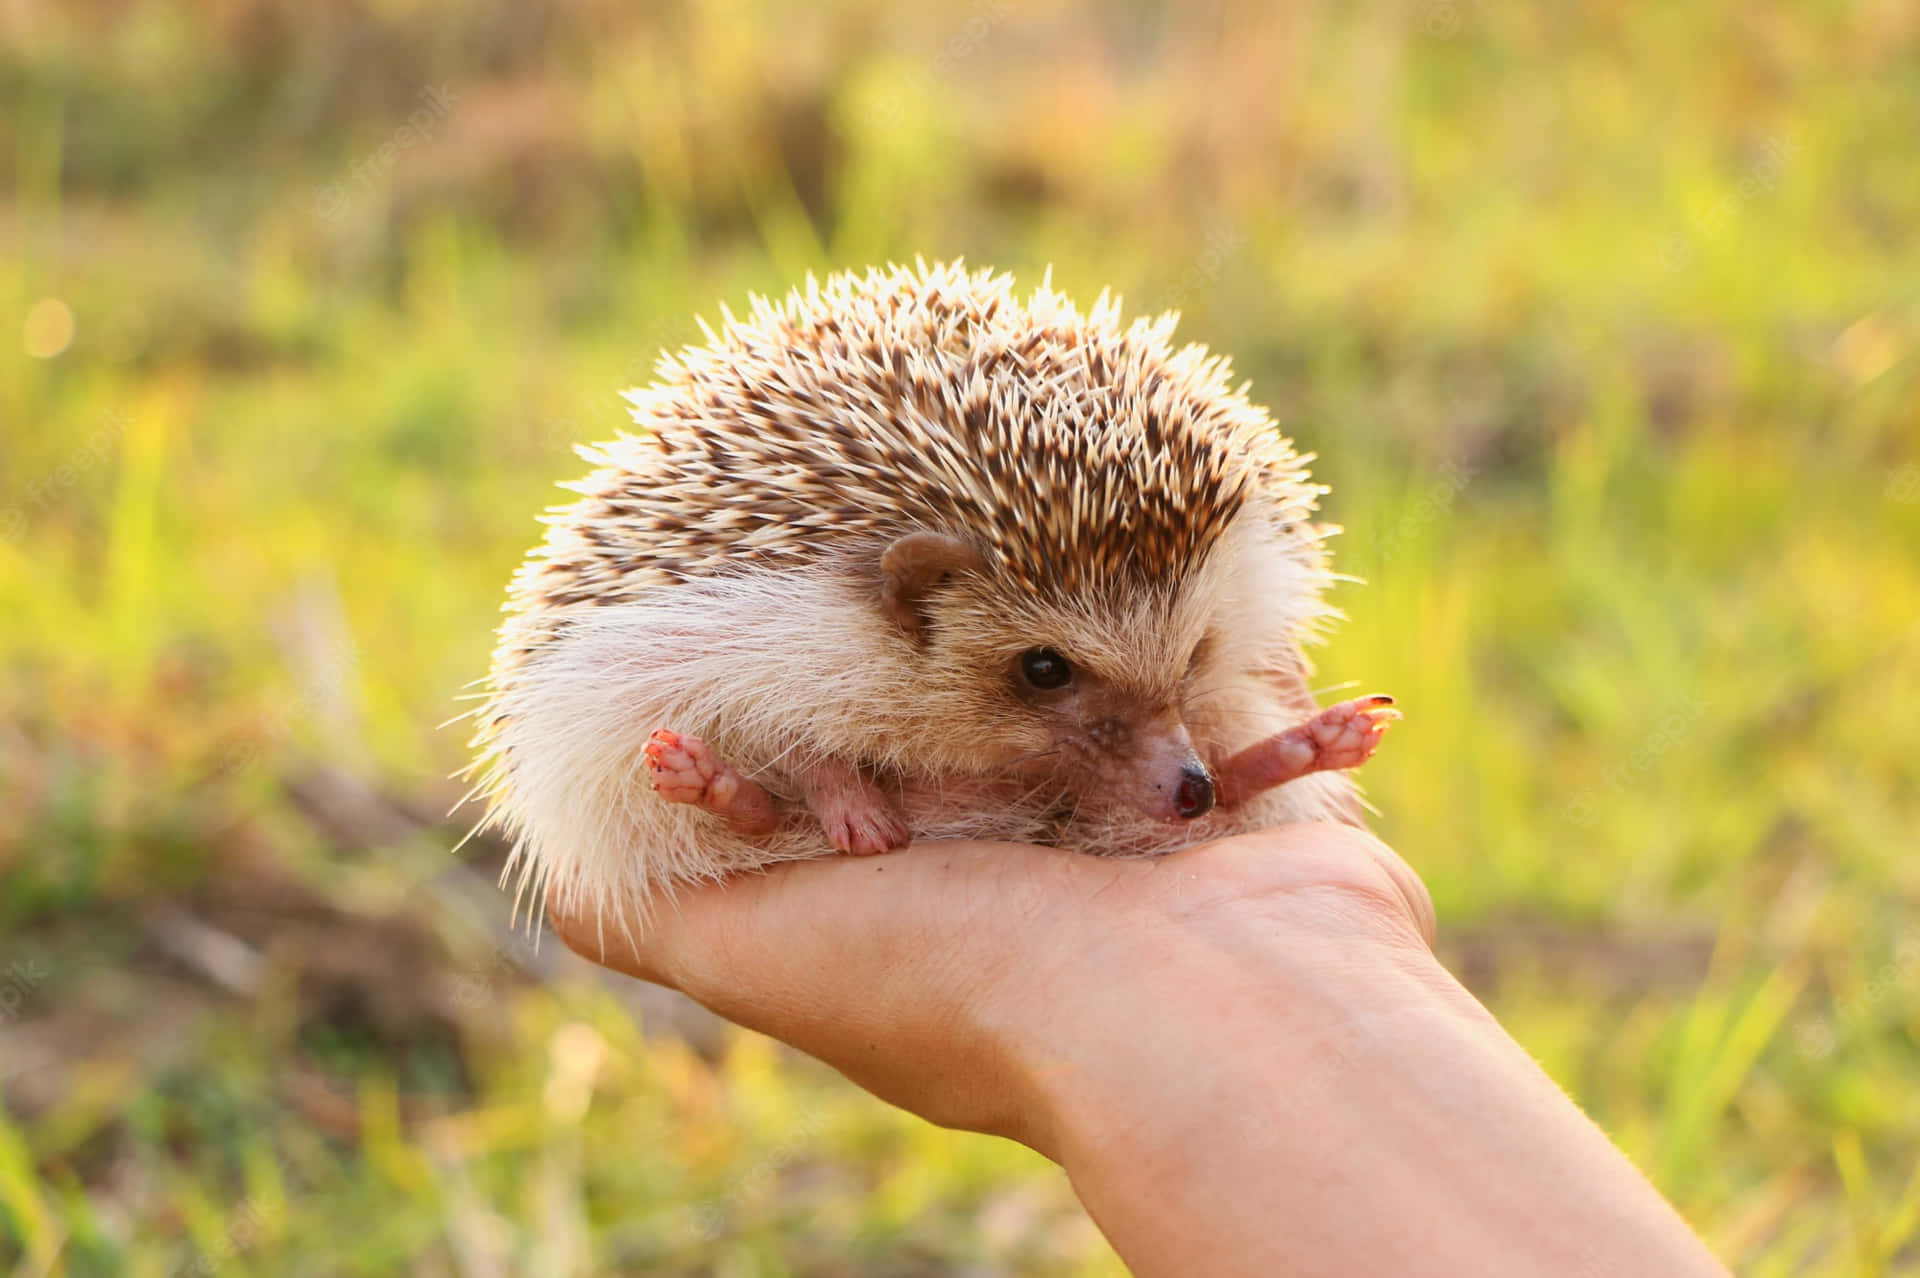 'A cute hedgehog bakes in the sun.' Wallpaper